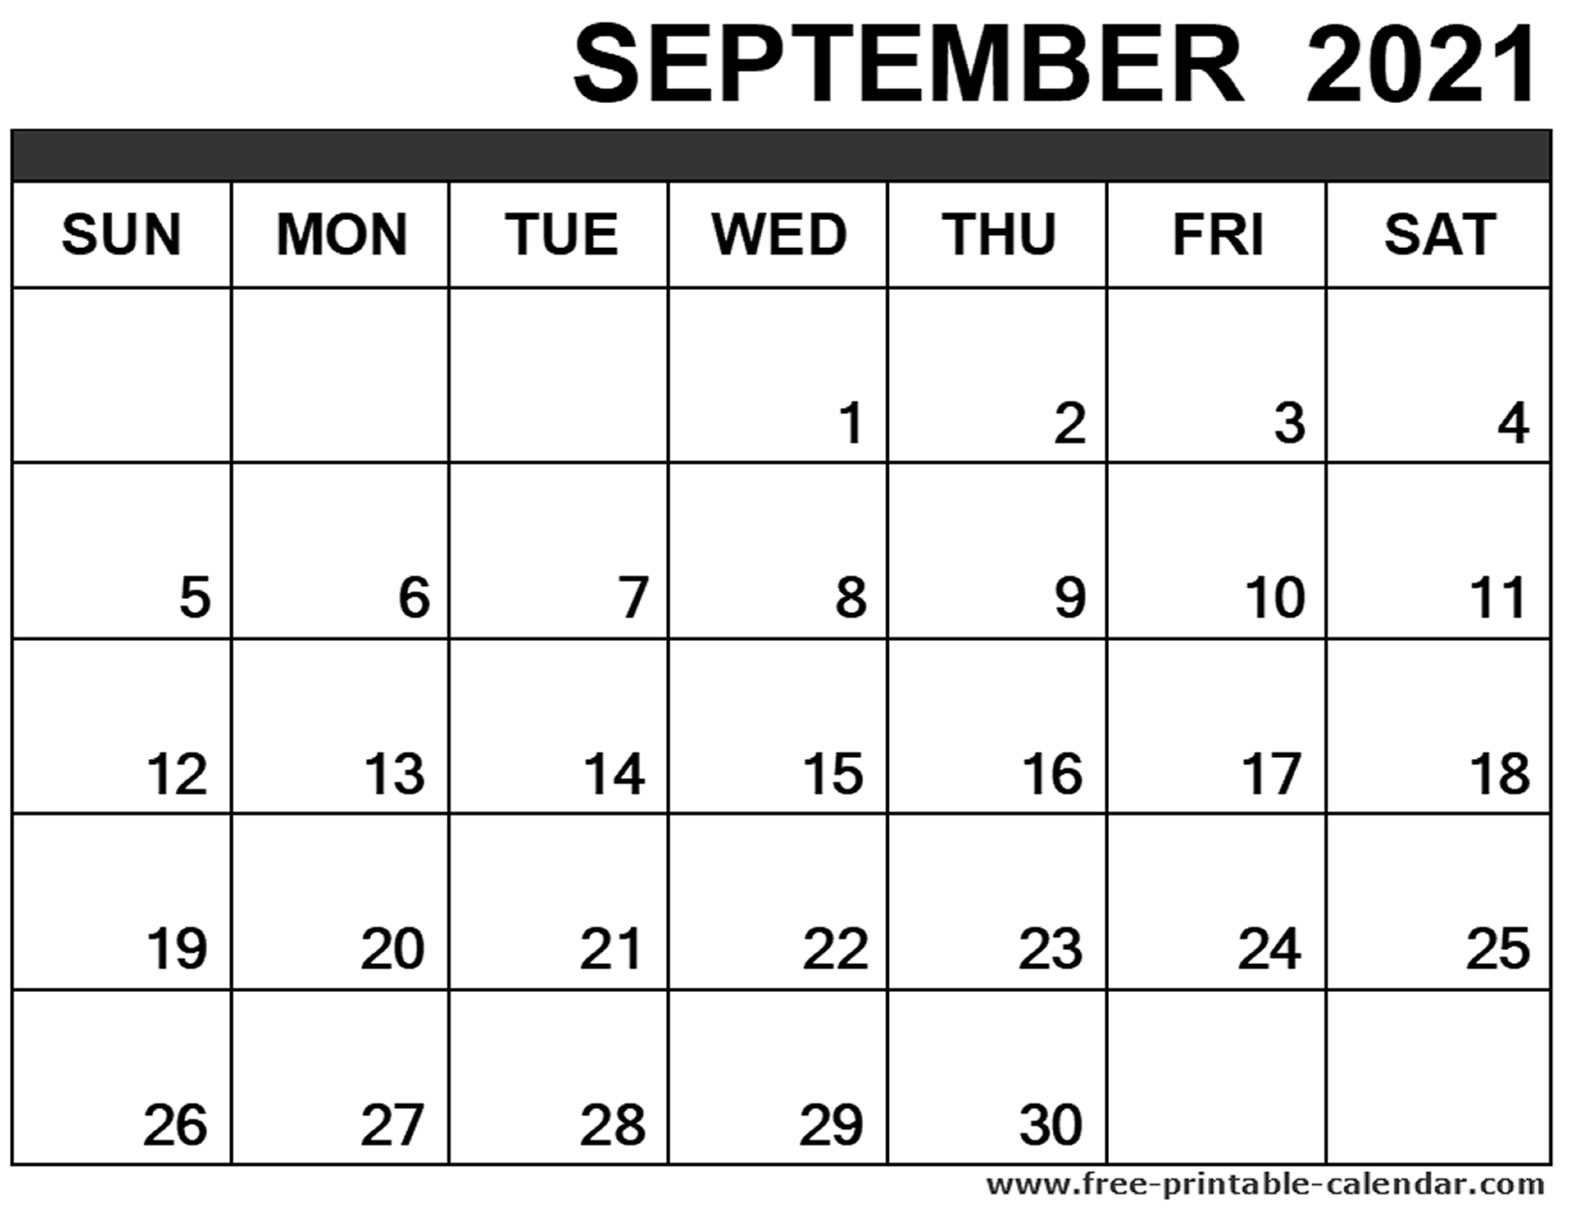 September 2021 Calendar Printable - Free-Printable-Calendar Print September 2021 Calendar